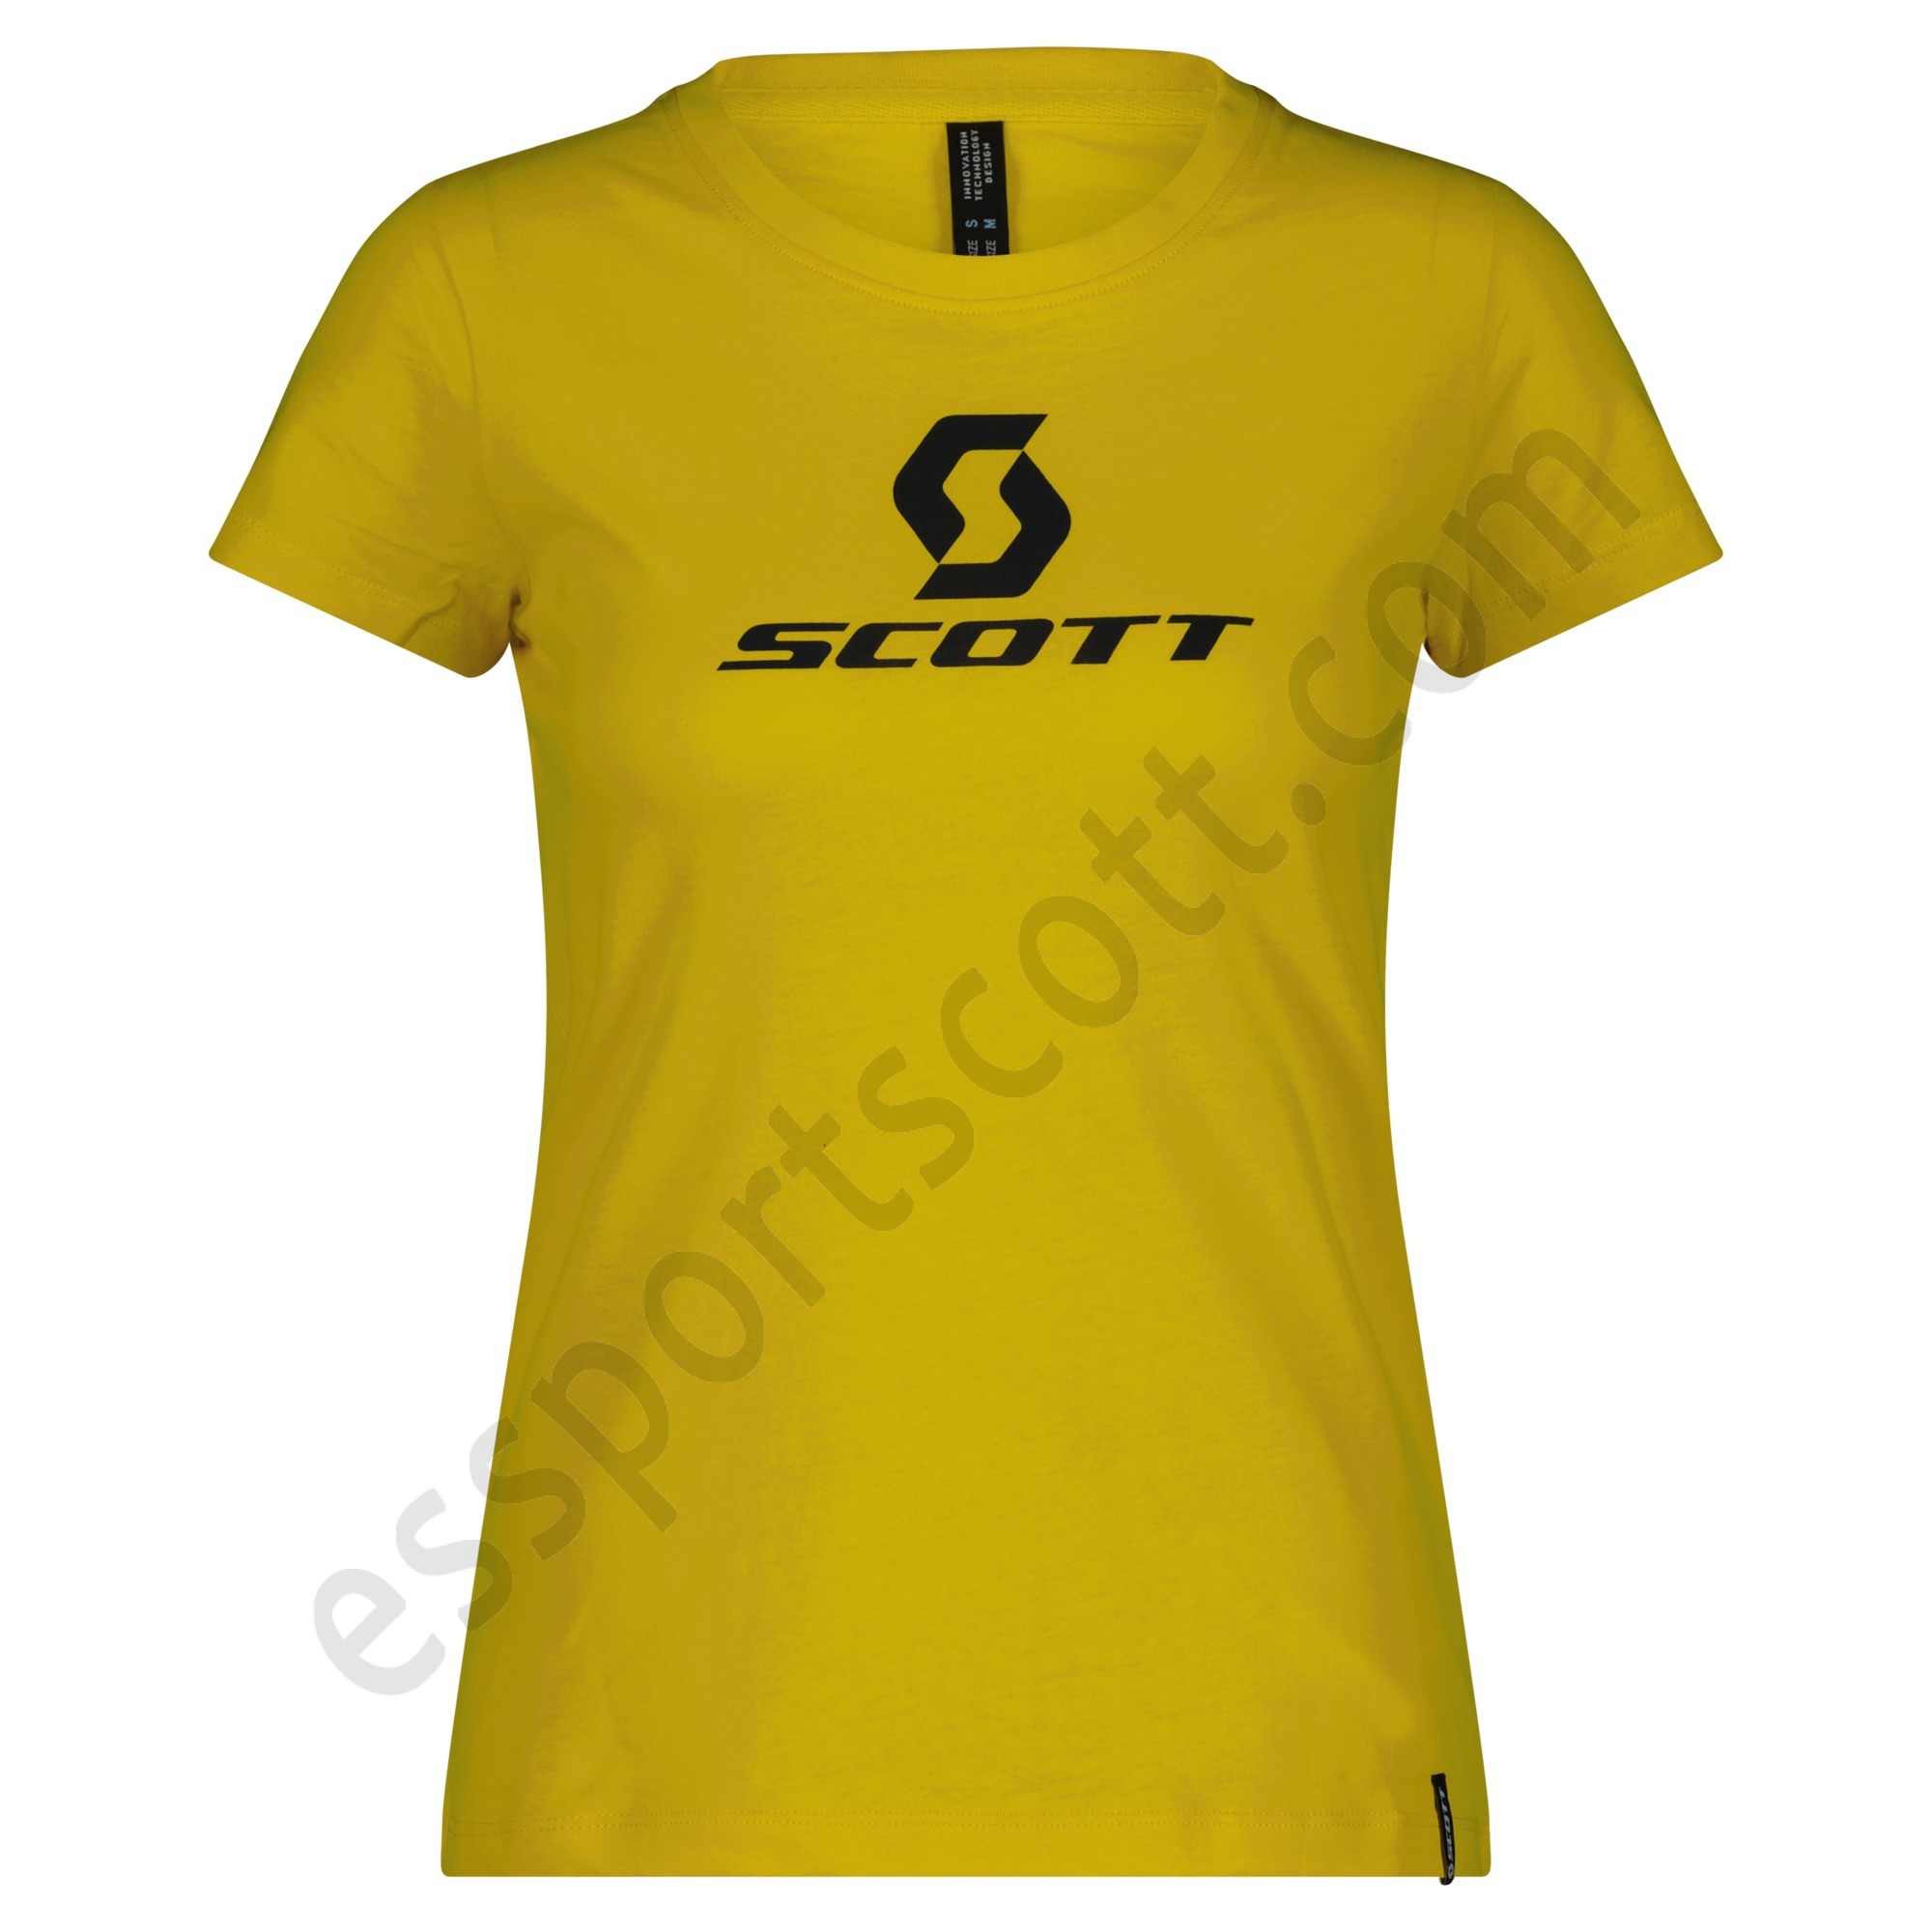 Scott Tienda ◇ Camiseta de manga corta para mujer Icon - Scott Tienda ◇ Camiseta de manga corta para mujer Icon